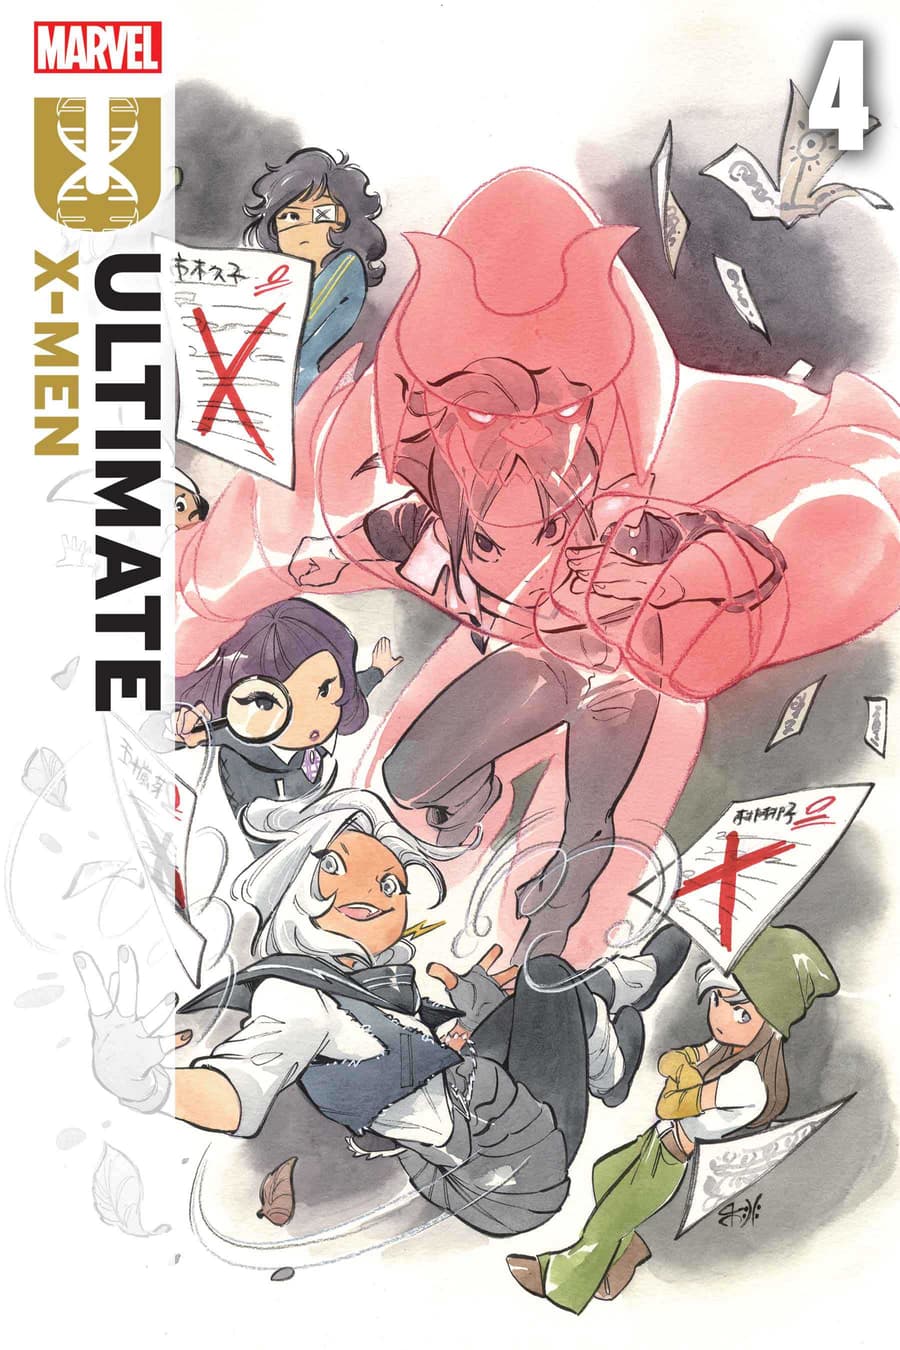 ULTIMATE X-MEN #4 cover by Peach Momoko